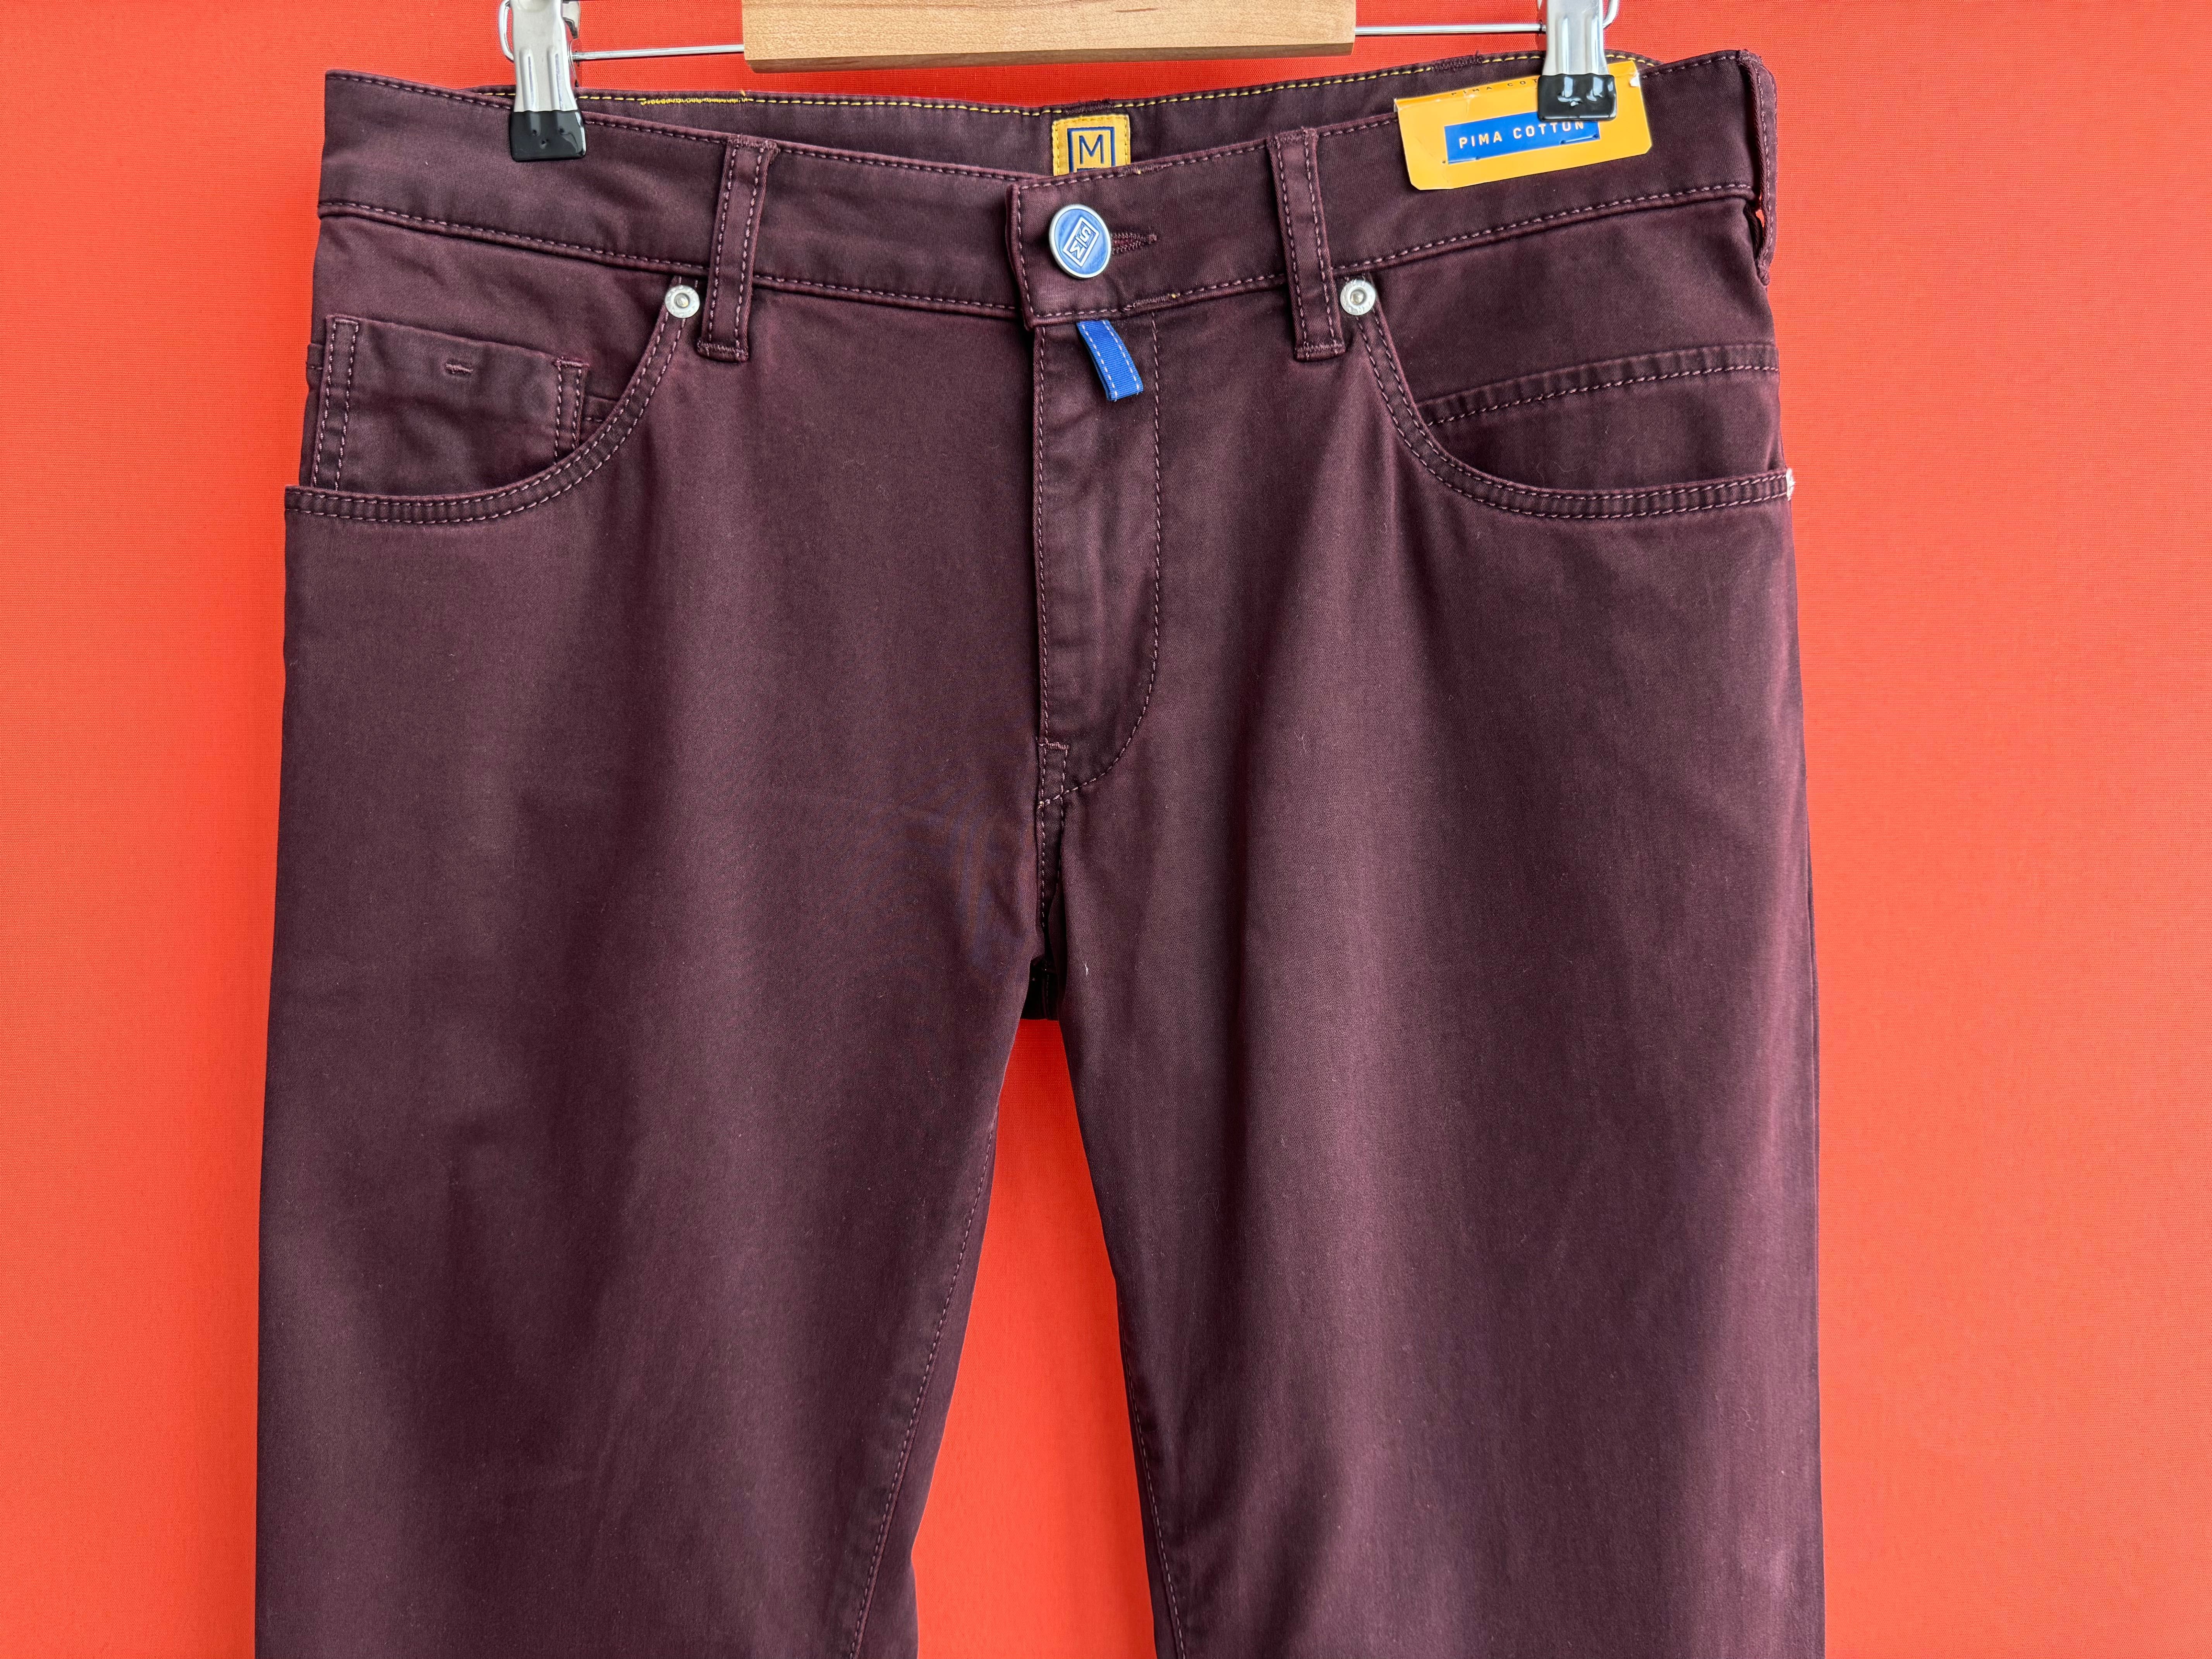 M5 by Meyer оригинал мужские джинсы штаны чиносы брюки размер 33 NEW